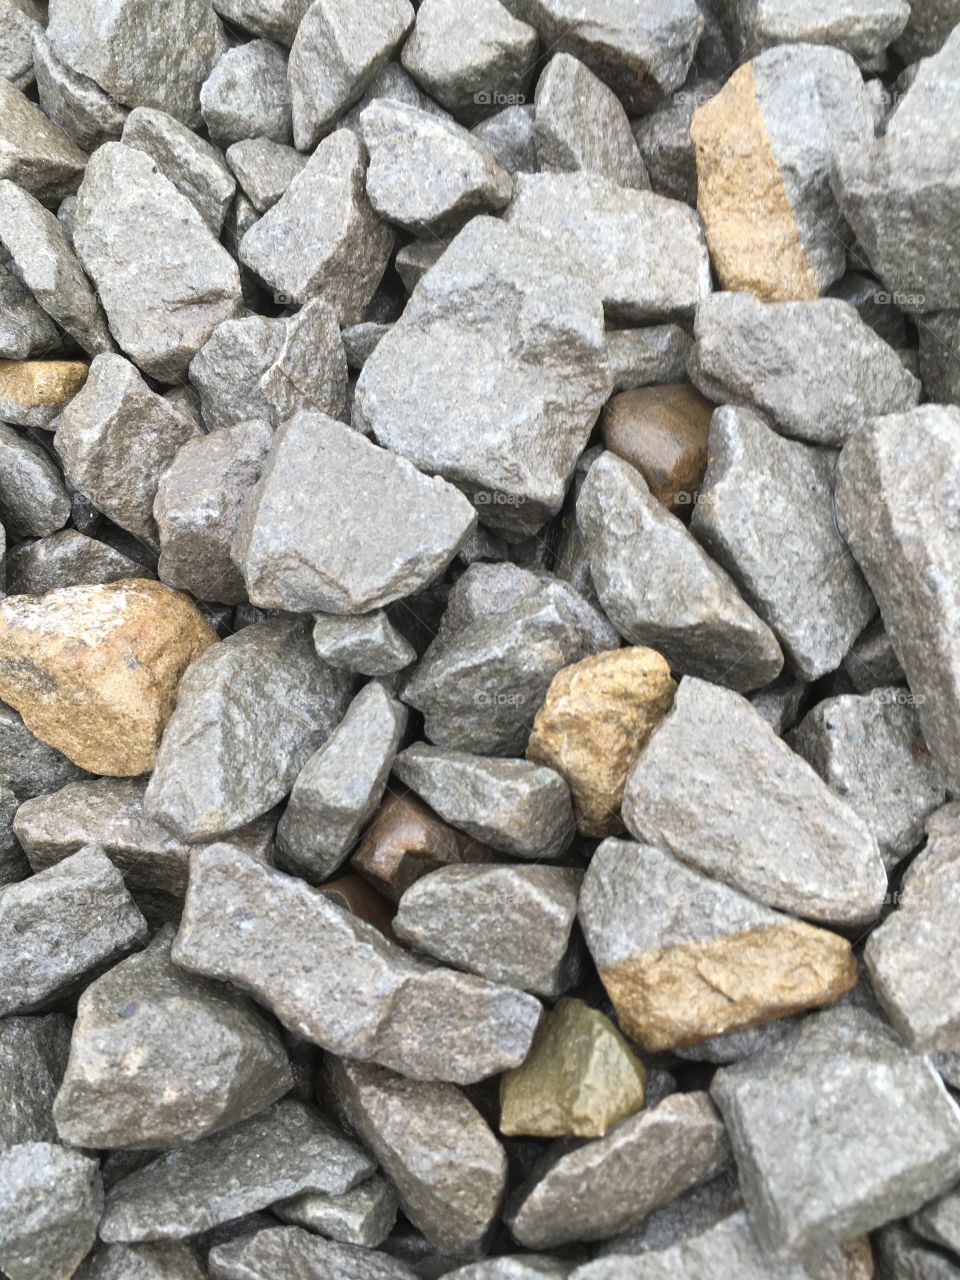 Stones after rain